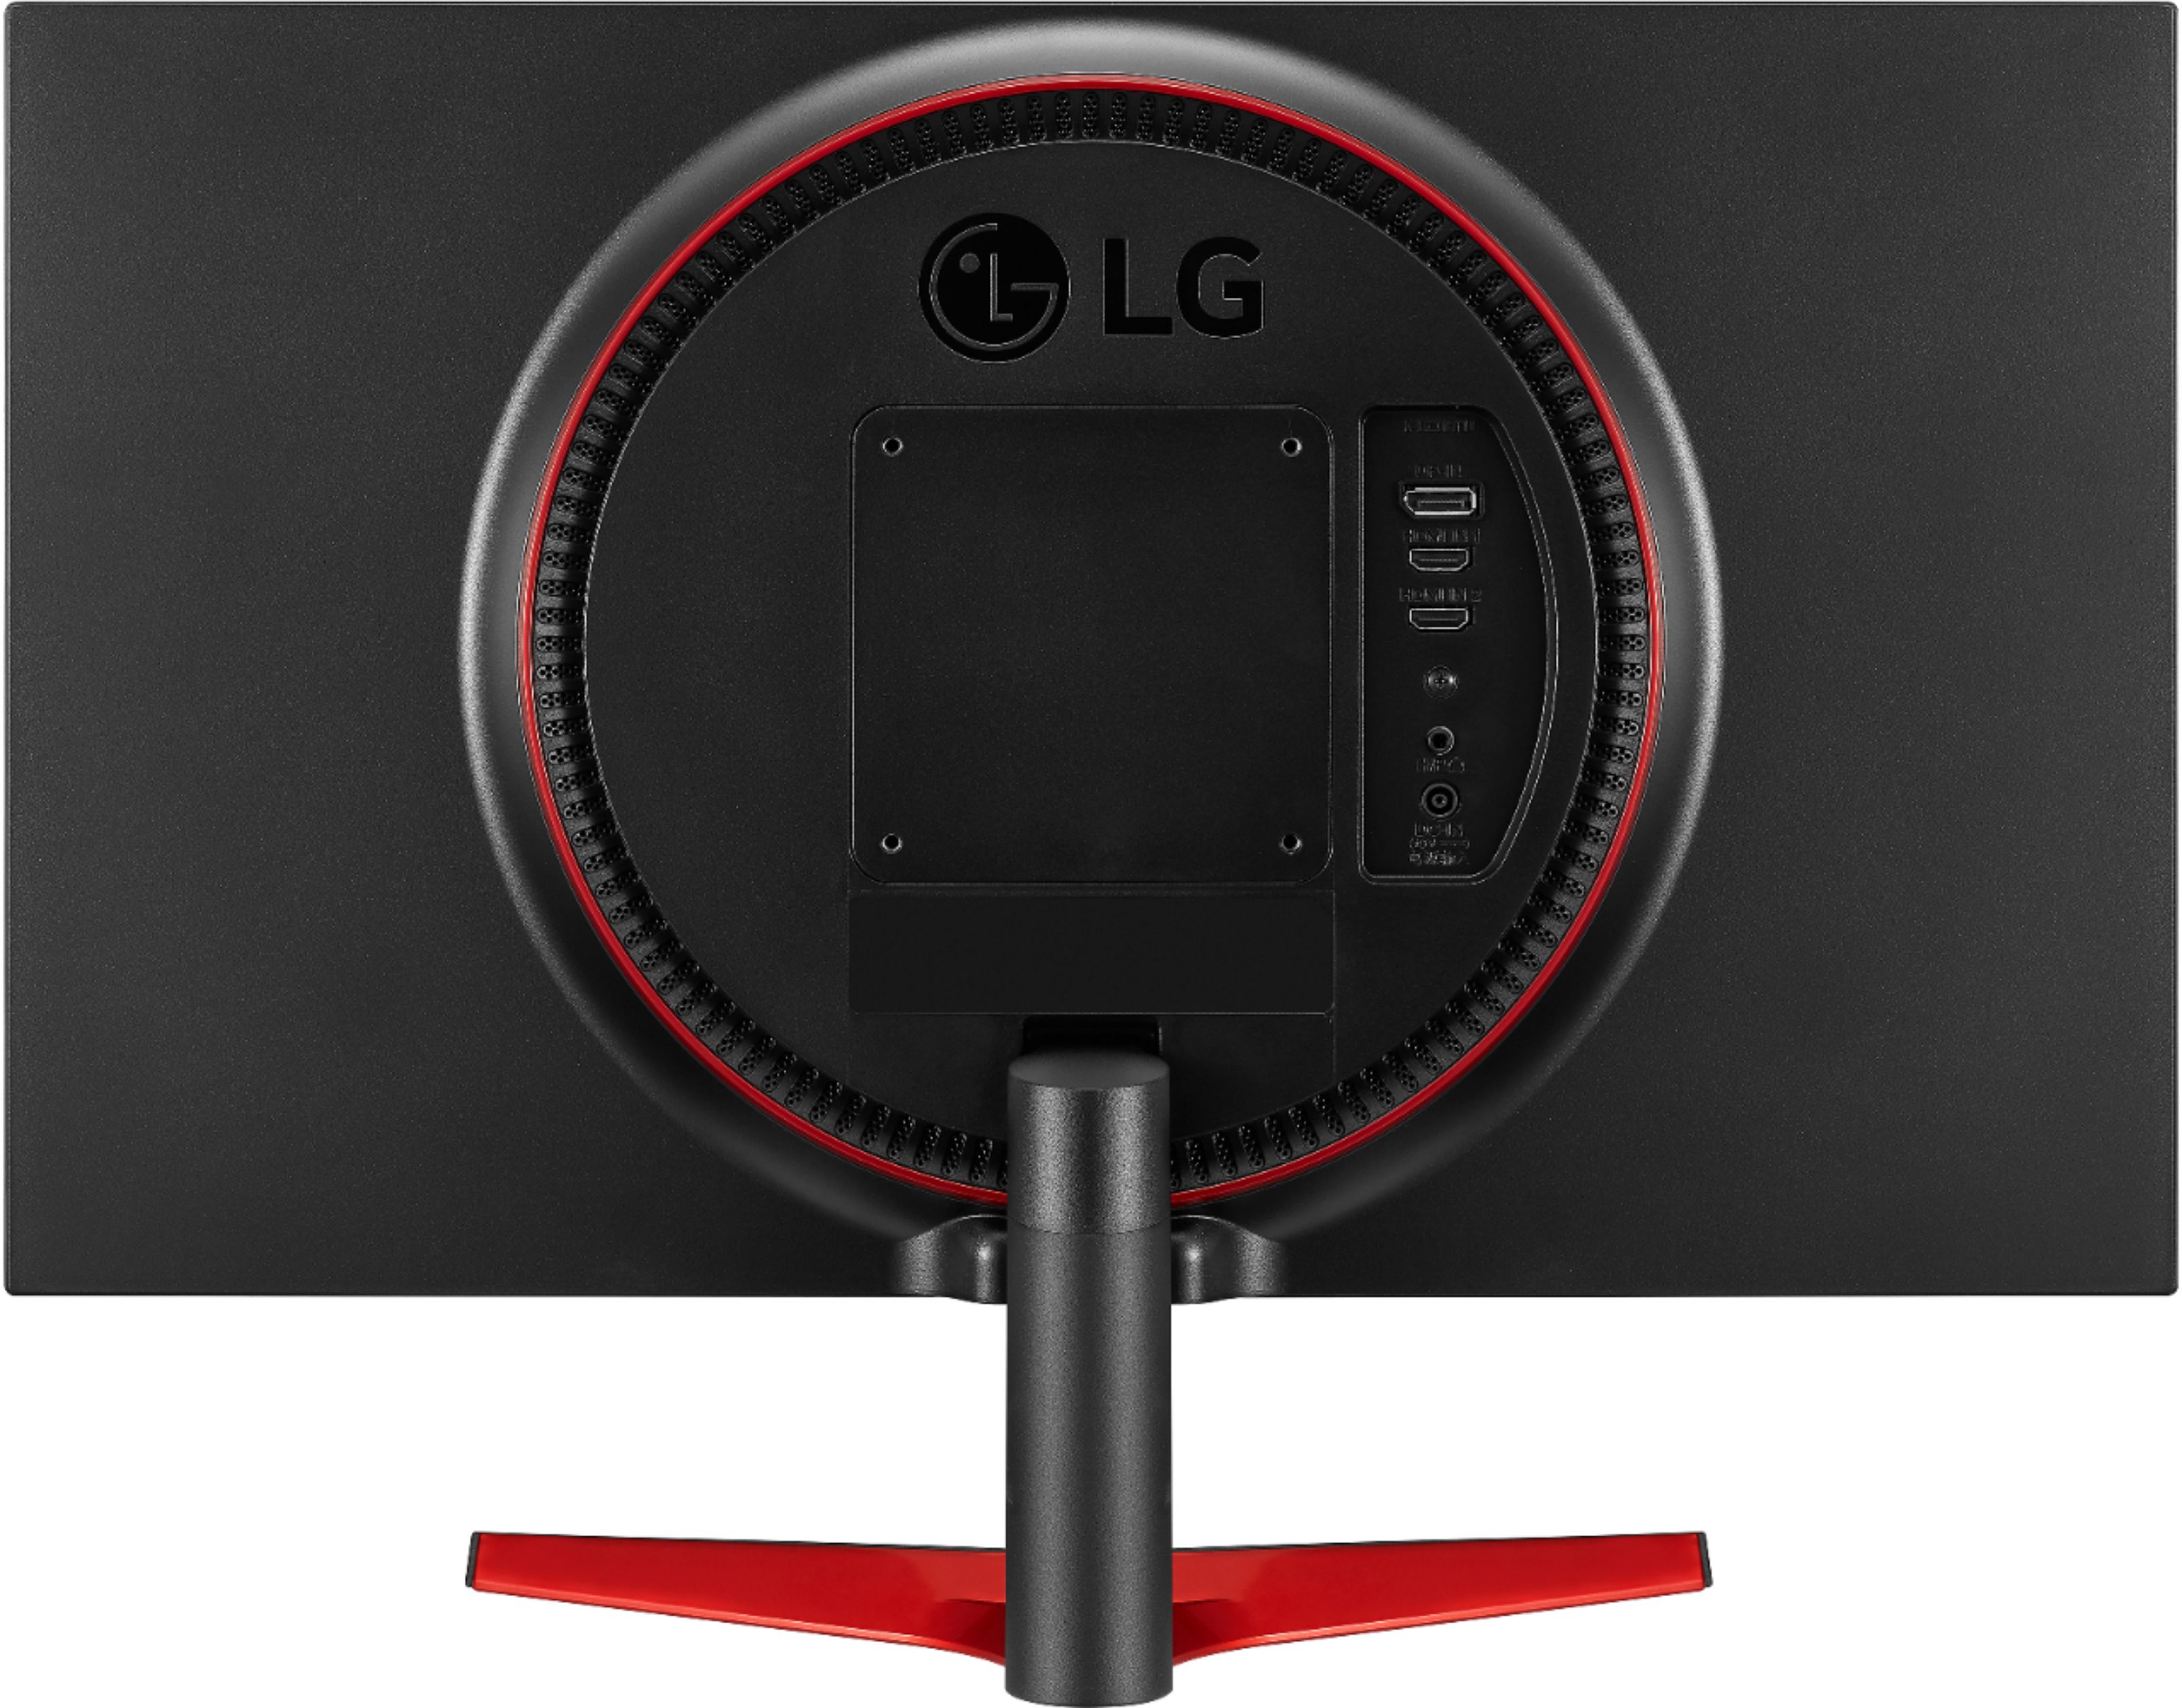 Back View: LG - UltraGear 24" LED FHD FreeSync Monitor (DisplayPort, HDMI) - Black